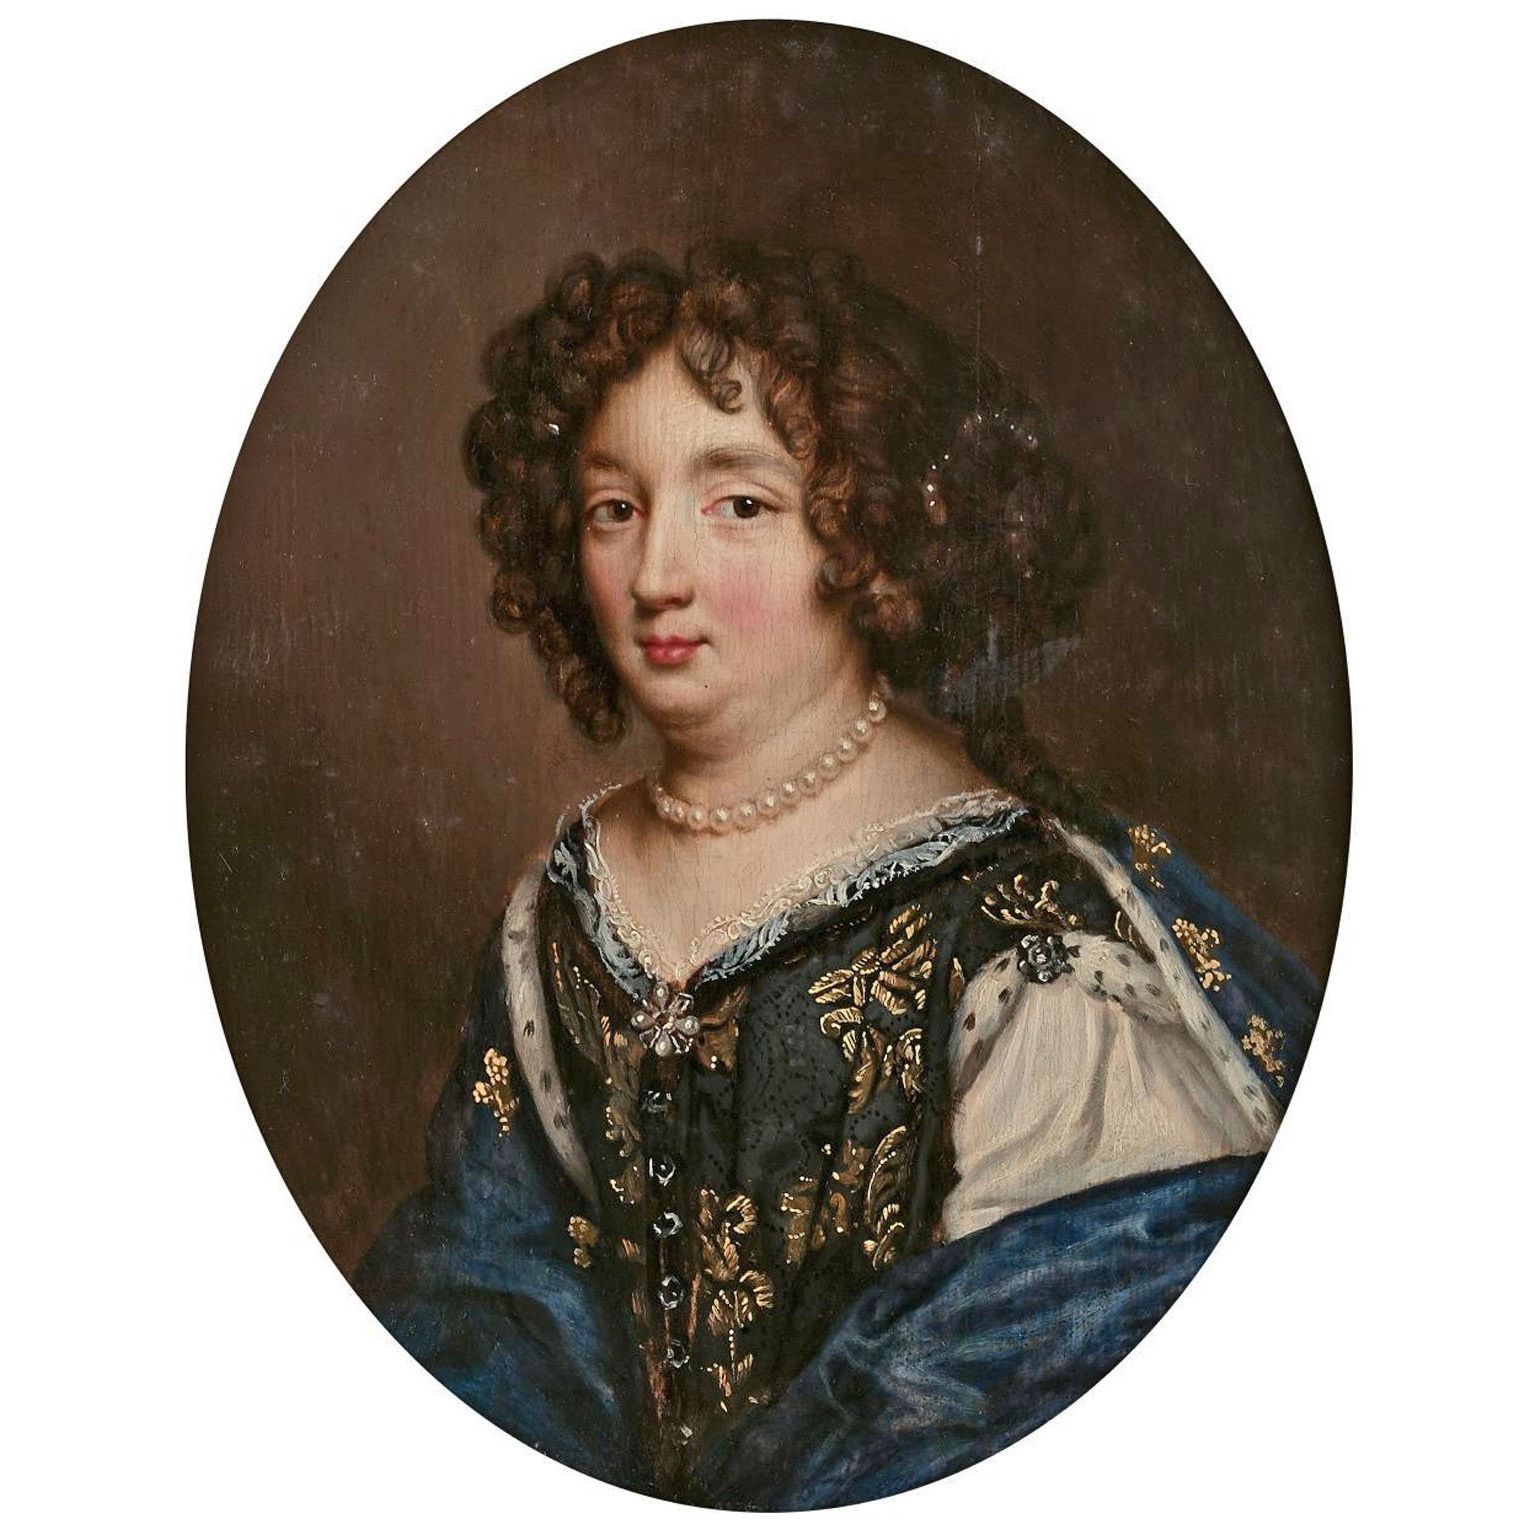 Claude Lefebvre. Mle de Lafayette. 1668. Private collection